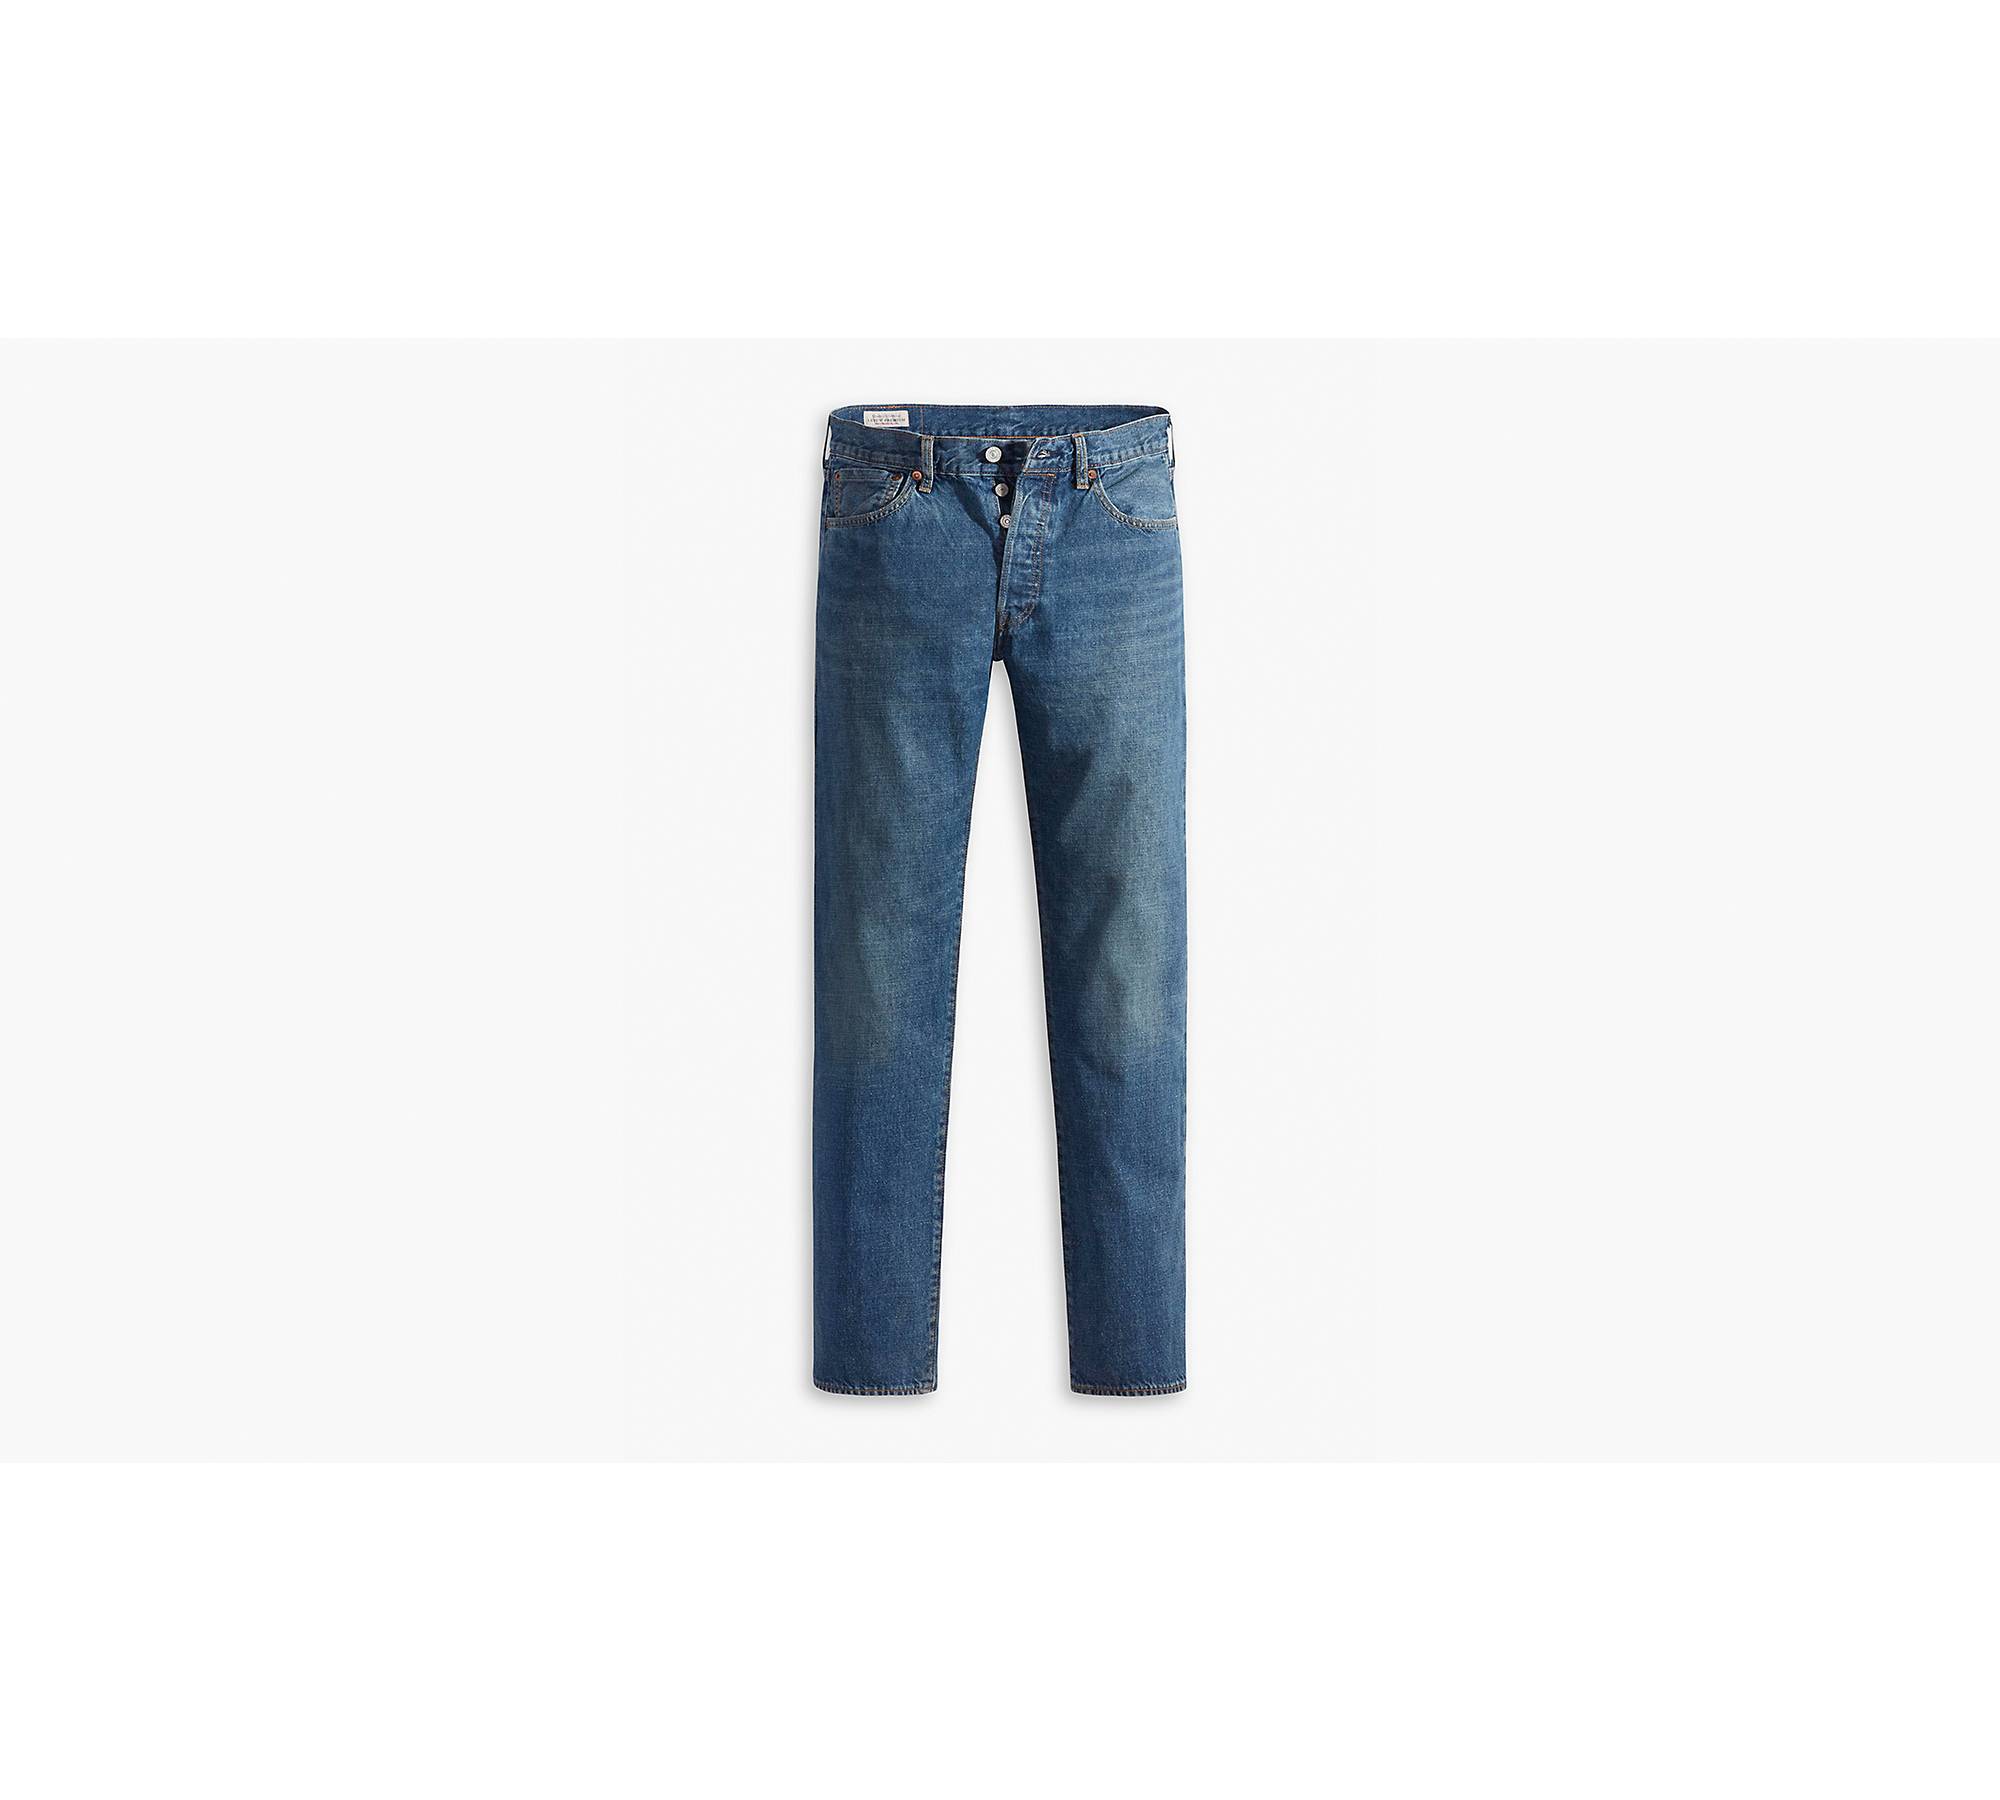 The BEST Walmart Jeans Under $27 - Thistlewood Farm